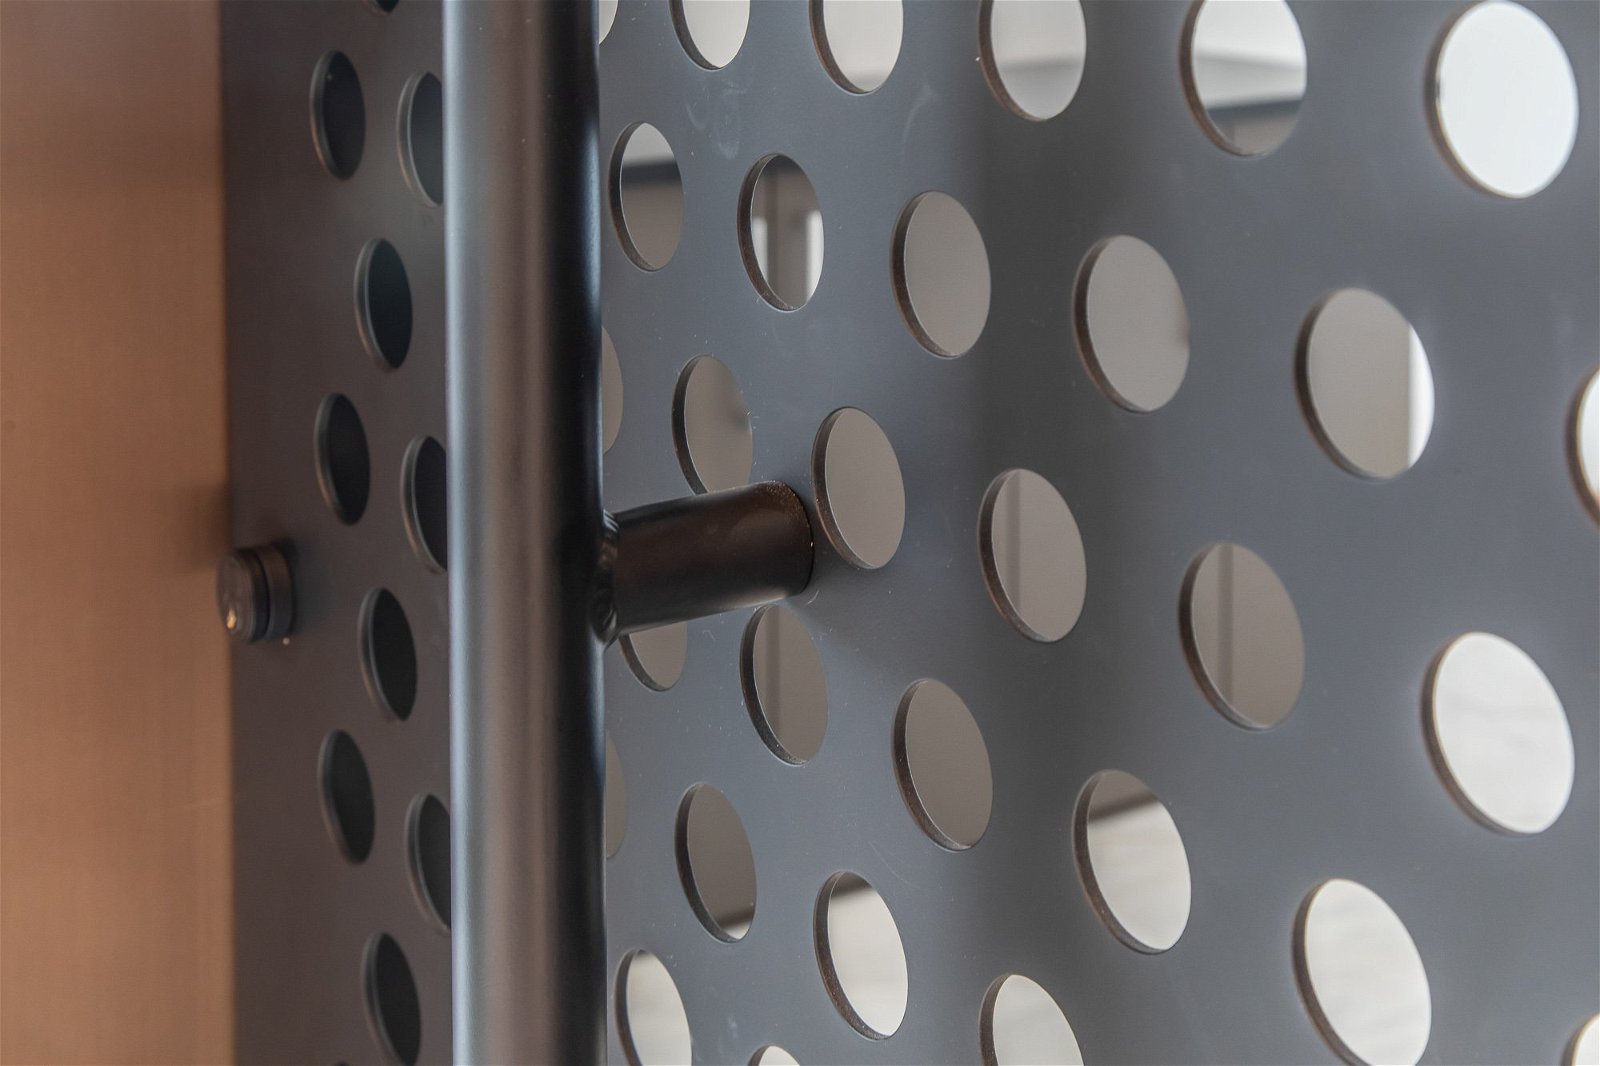 Aluminum pivot door fabrication with FritsJurgens pivot hinges inside - handle view.